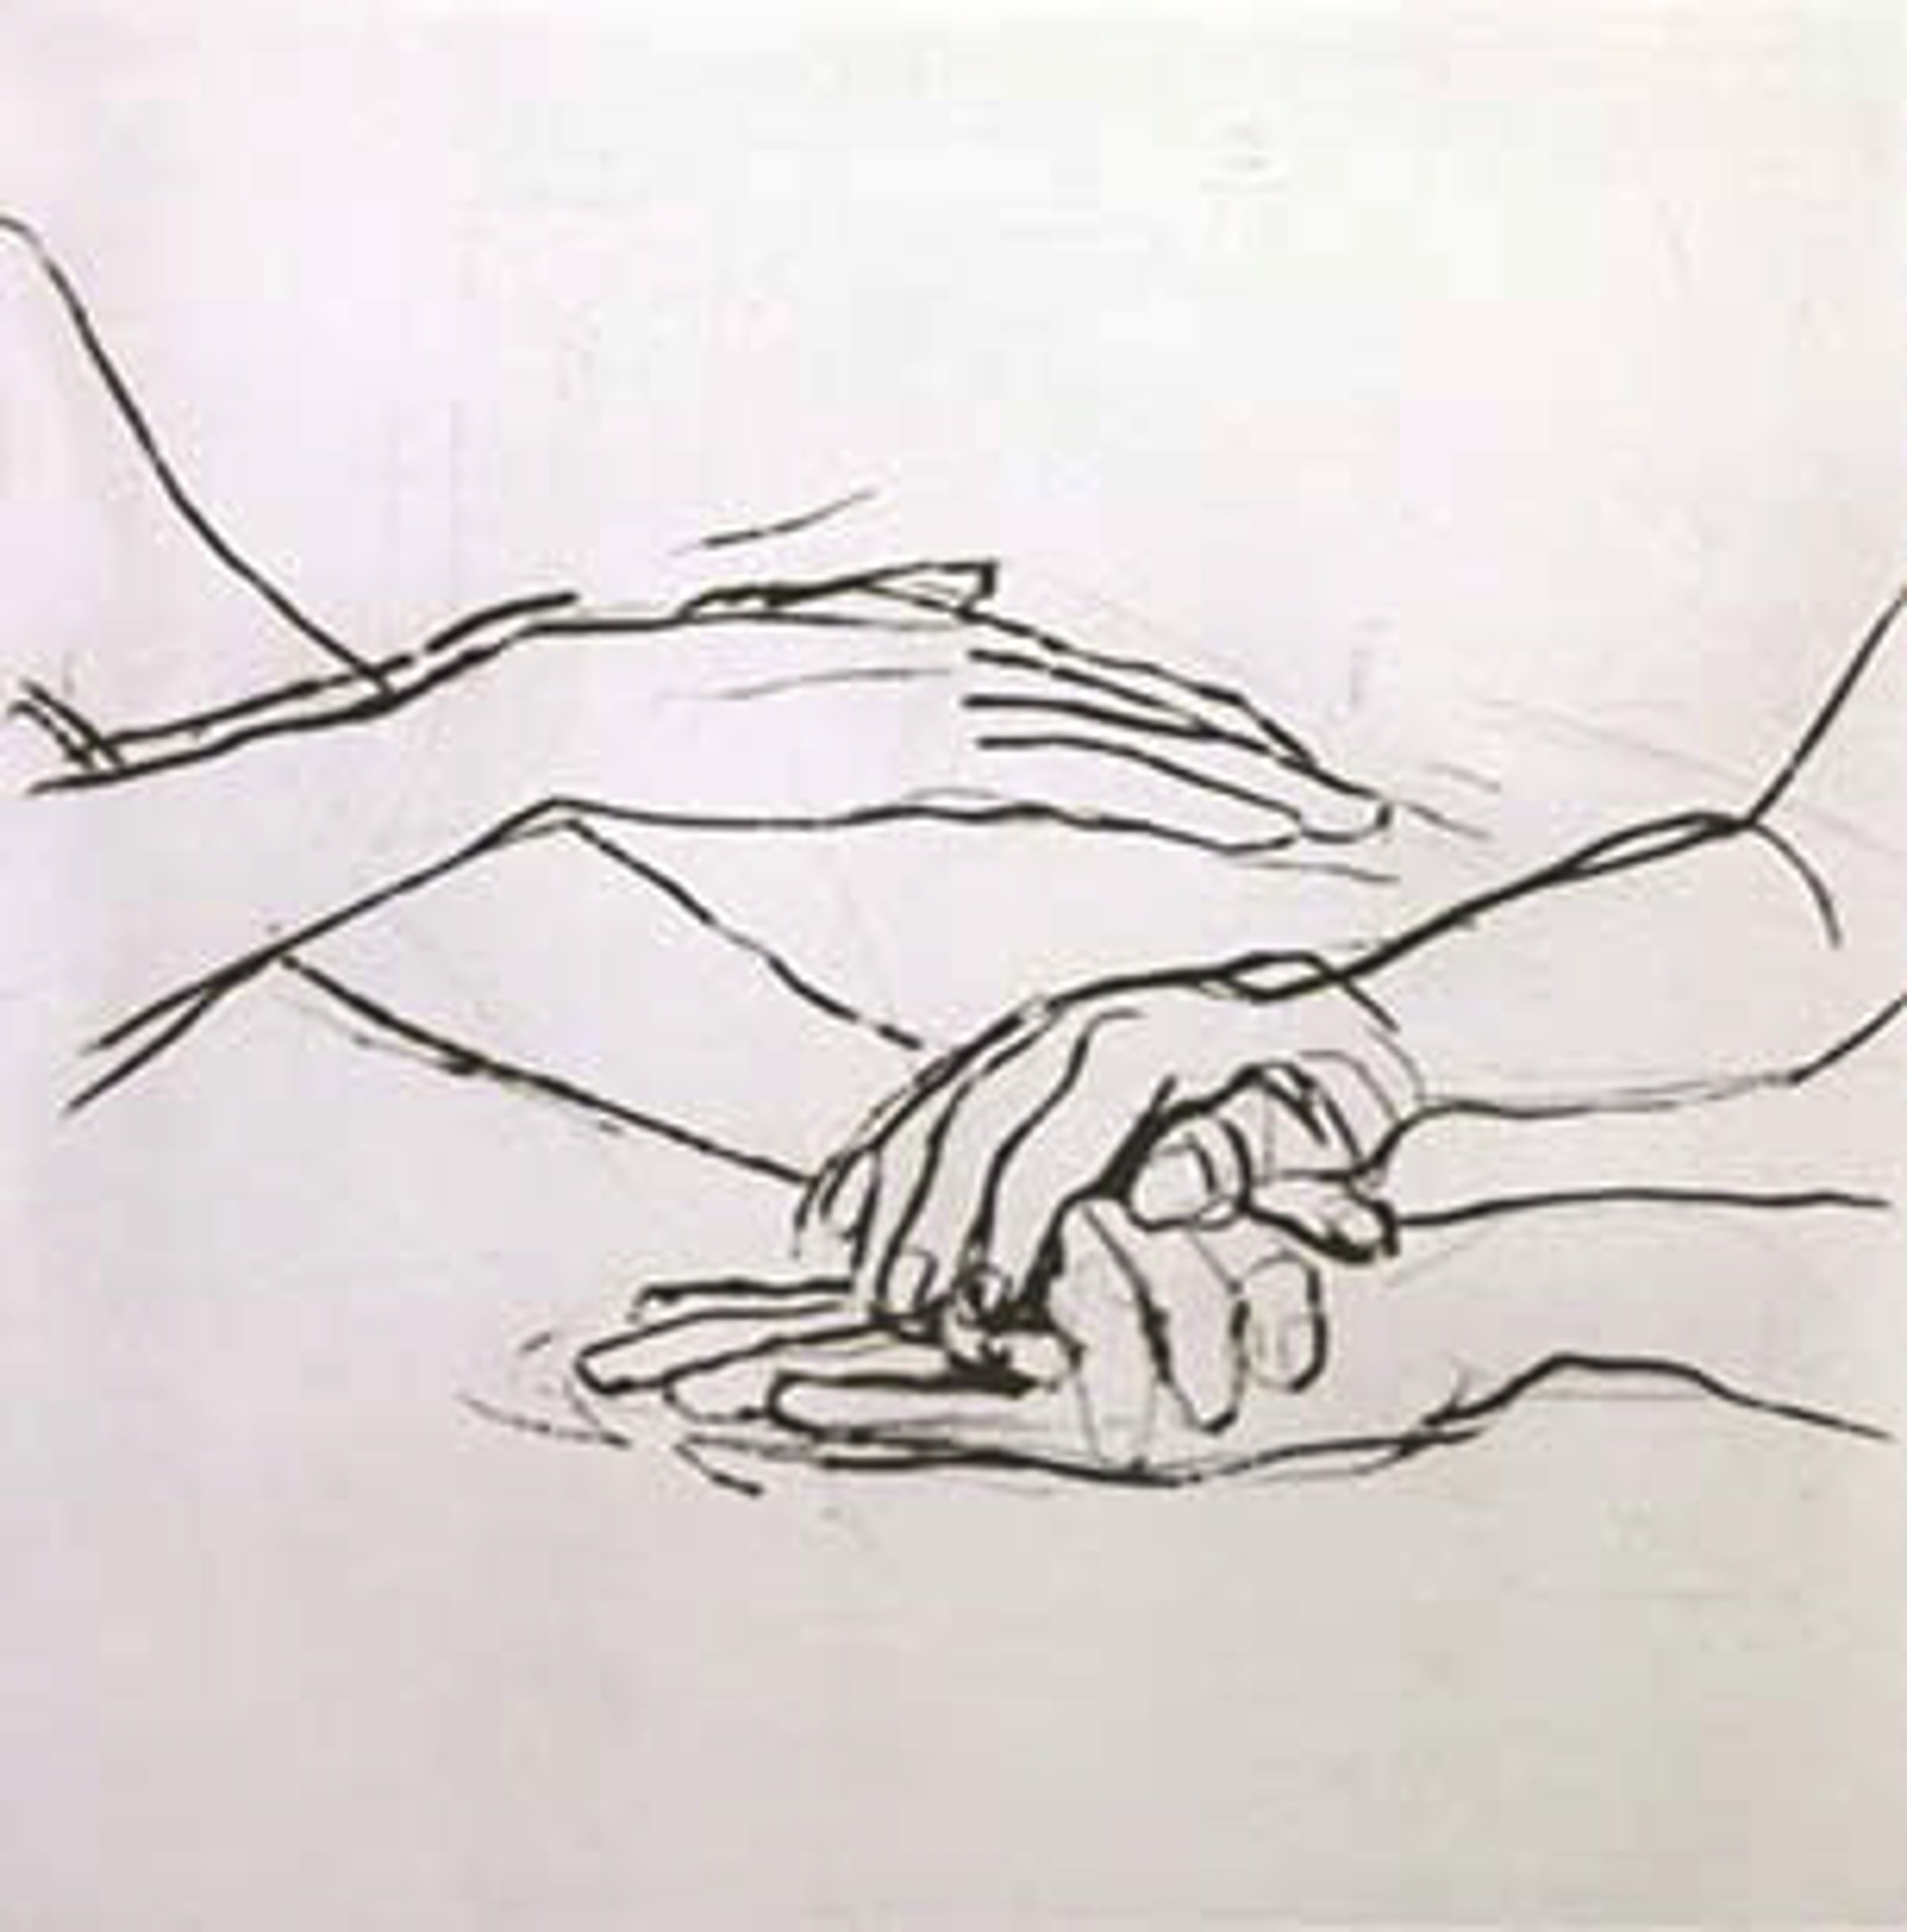 The Hand Game by Paula Schuette Kraemer